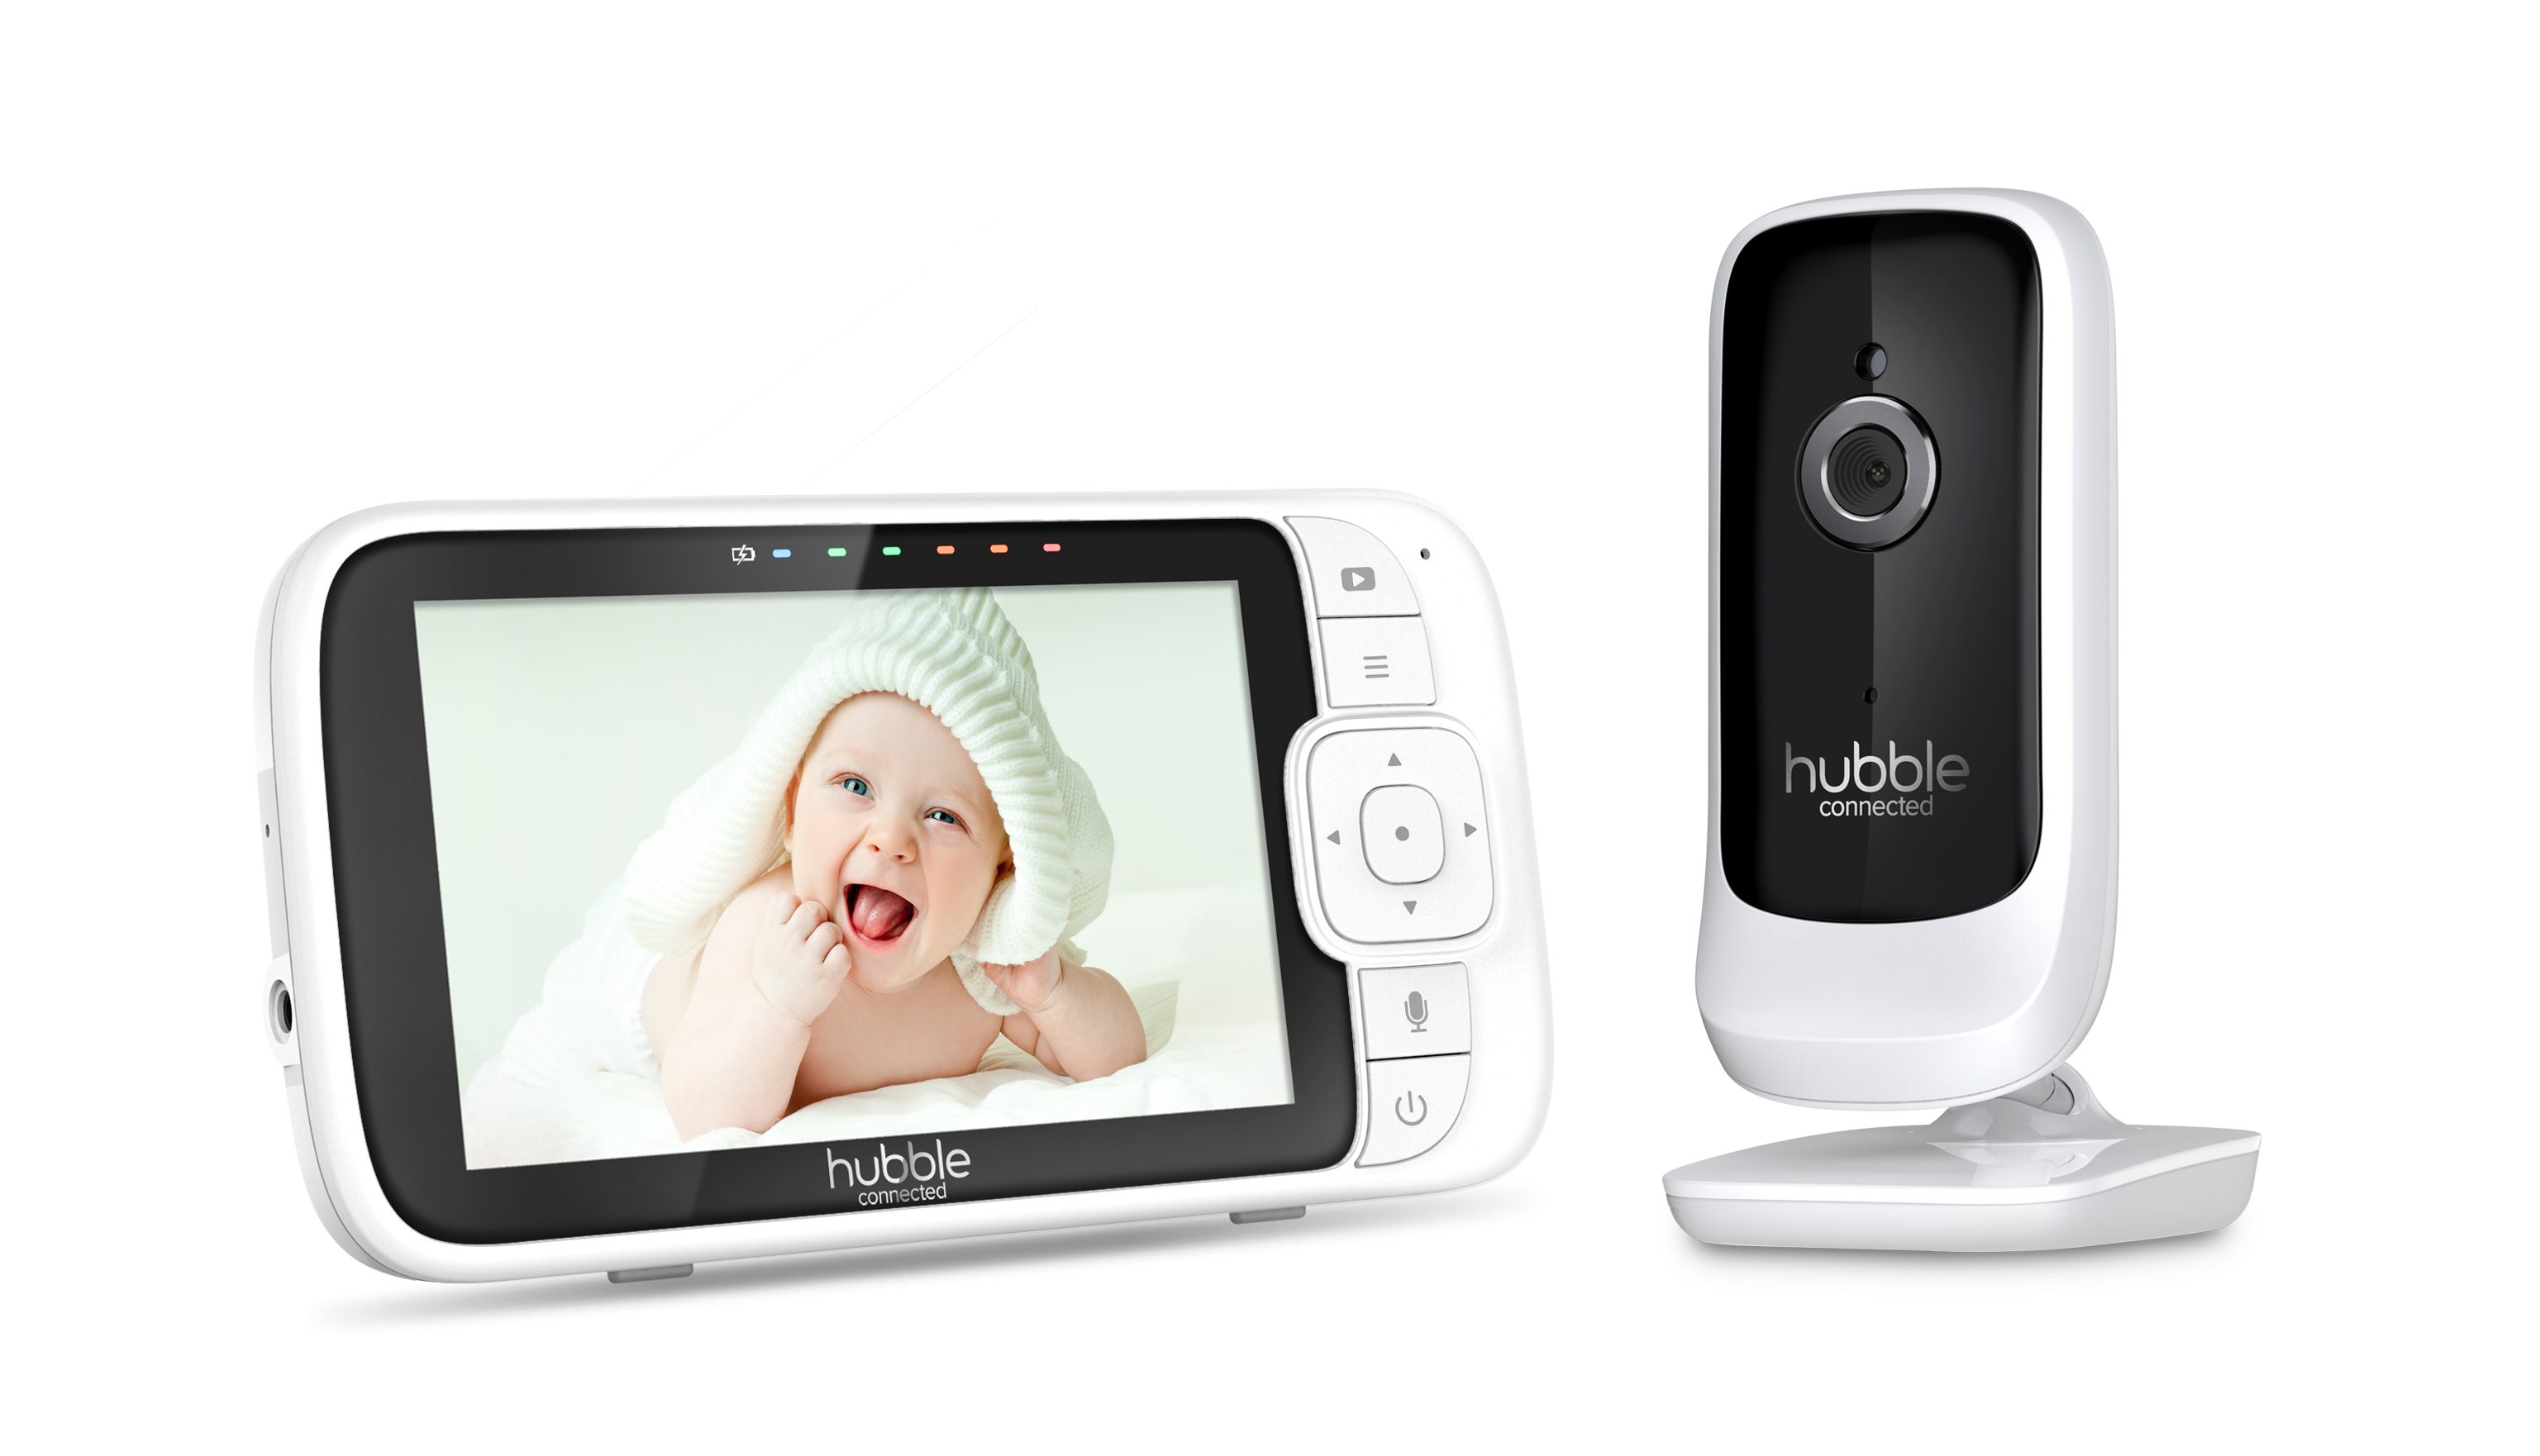 Hubble Connected Video-Babyphone Nursery View Premium 5", Babymonitor -  Temparatursensor, Gegensprech-, und Nachtsichtfunktion